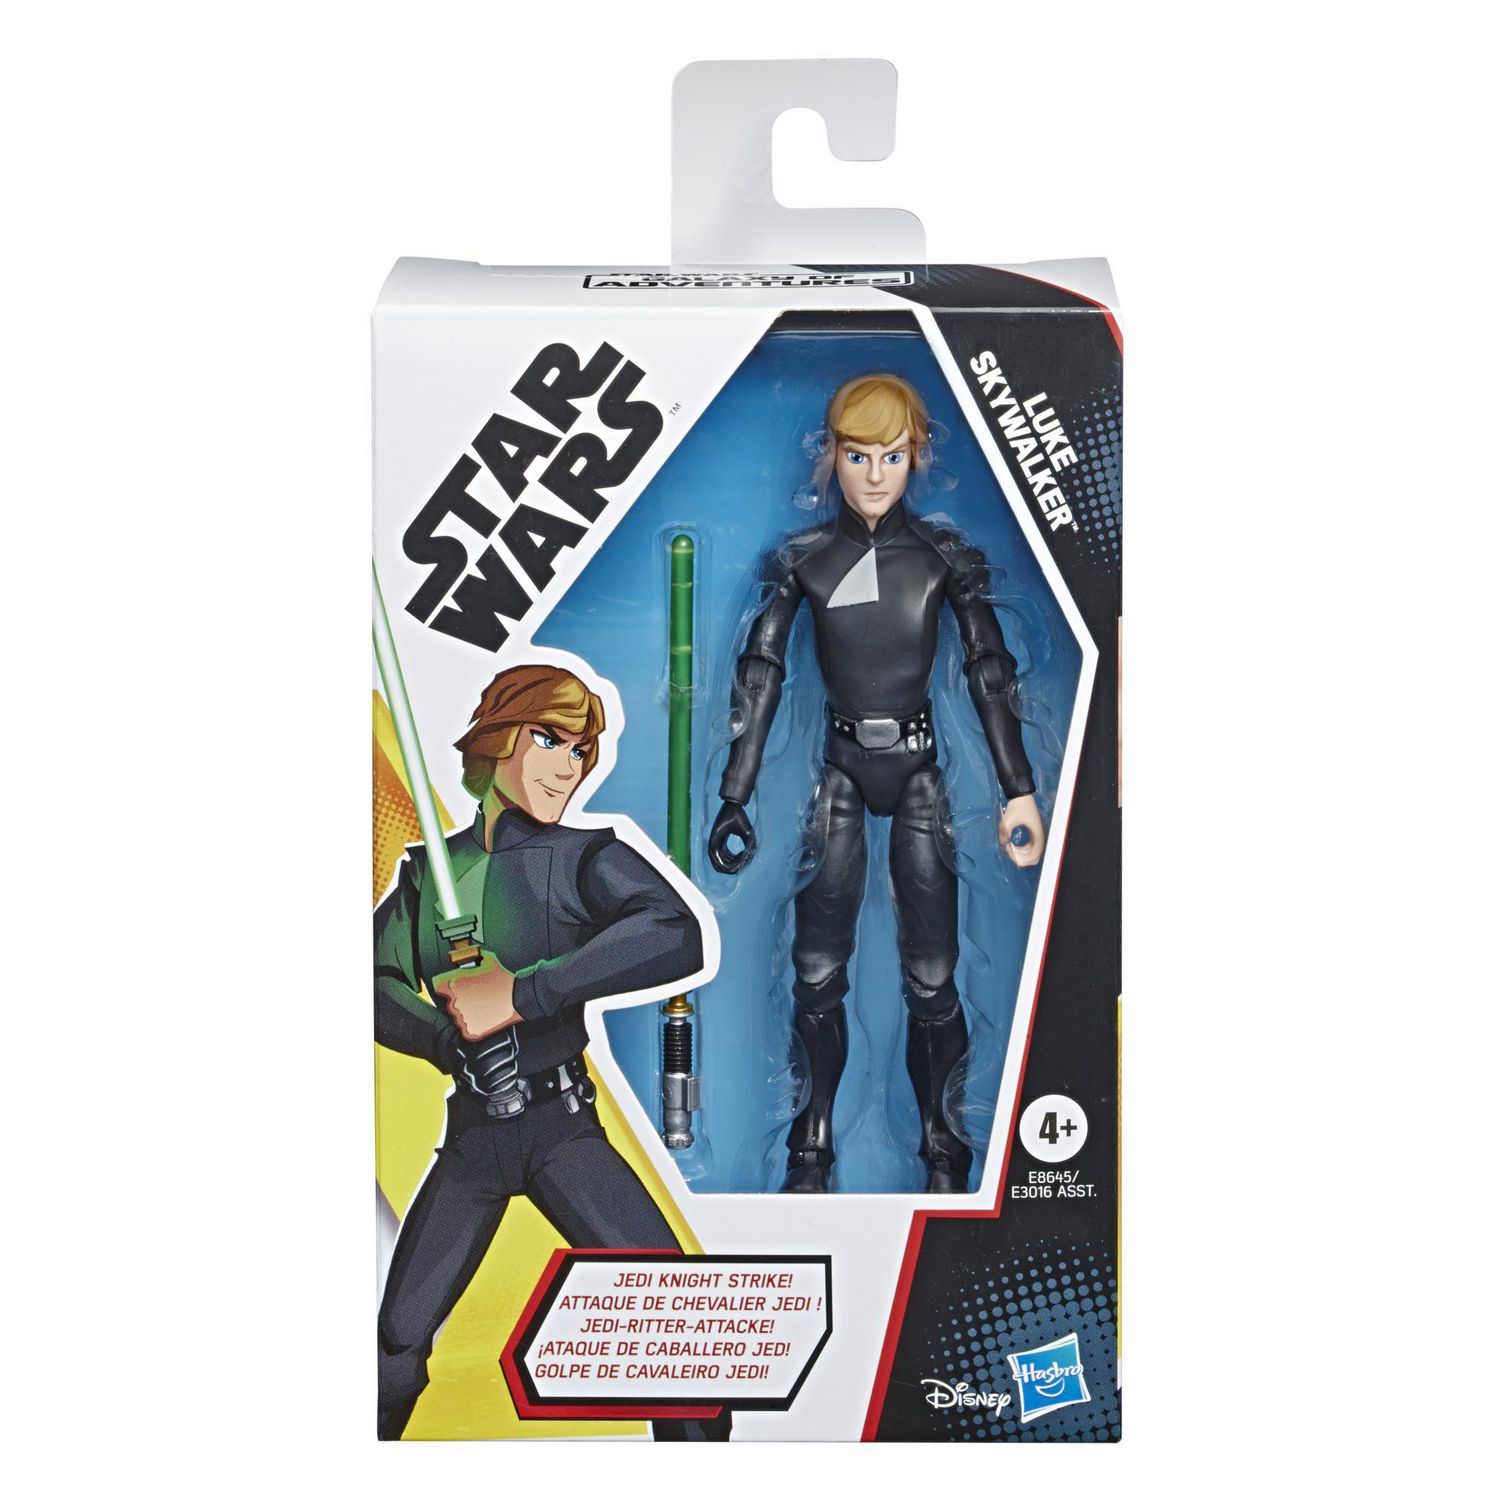 Skywalker　Luke　Adventures　Star　with　5-inch　Wars　Lightsaber　Scale　Galaxy　of　Figure